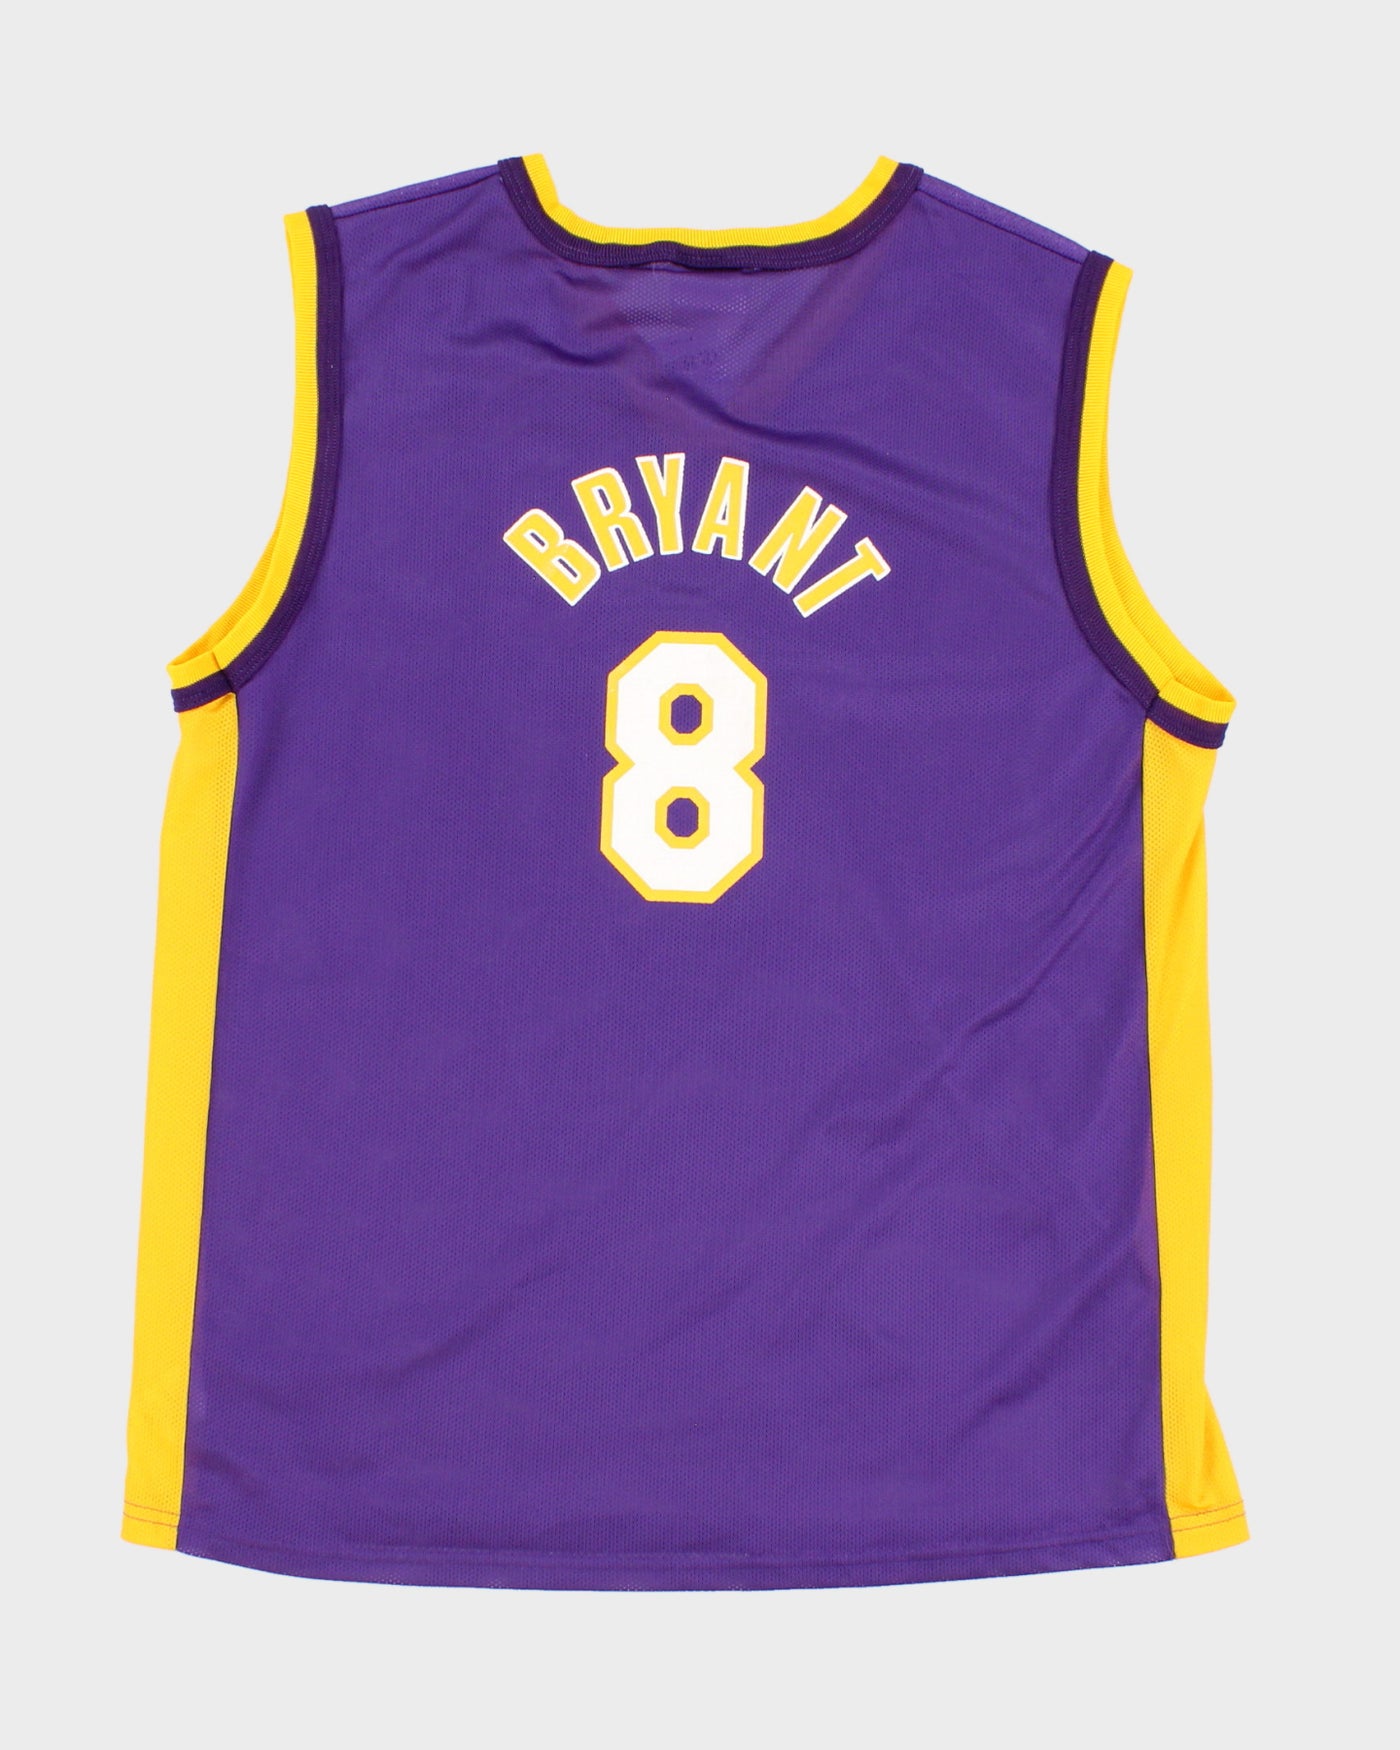 LOS ANGELES LAKERS Kobe Bryant Jersey #8 Throwback Adult purple